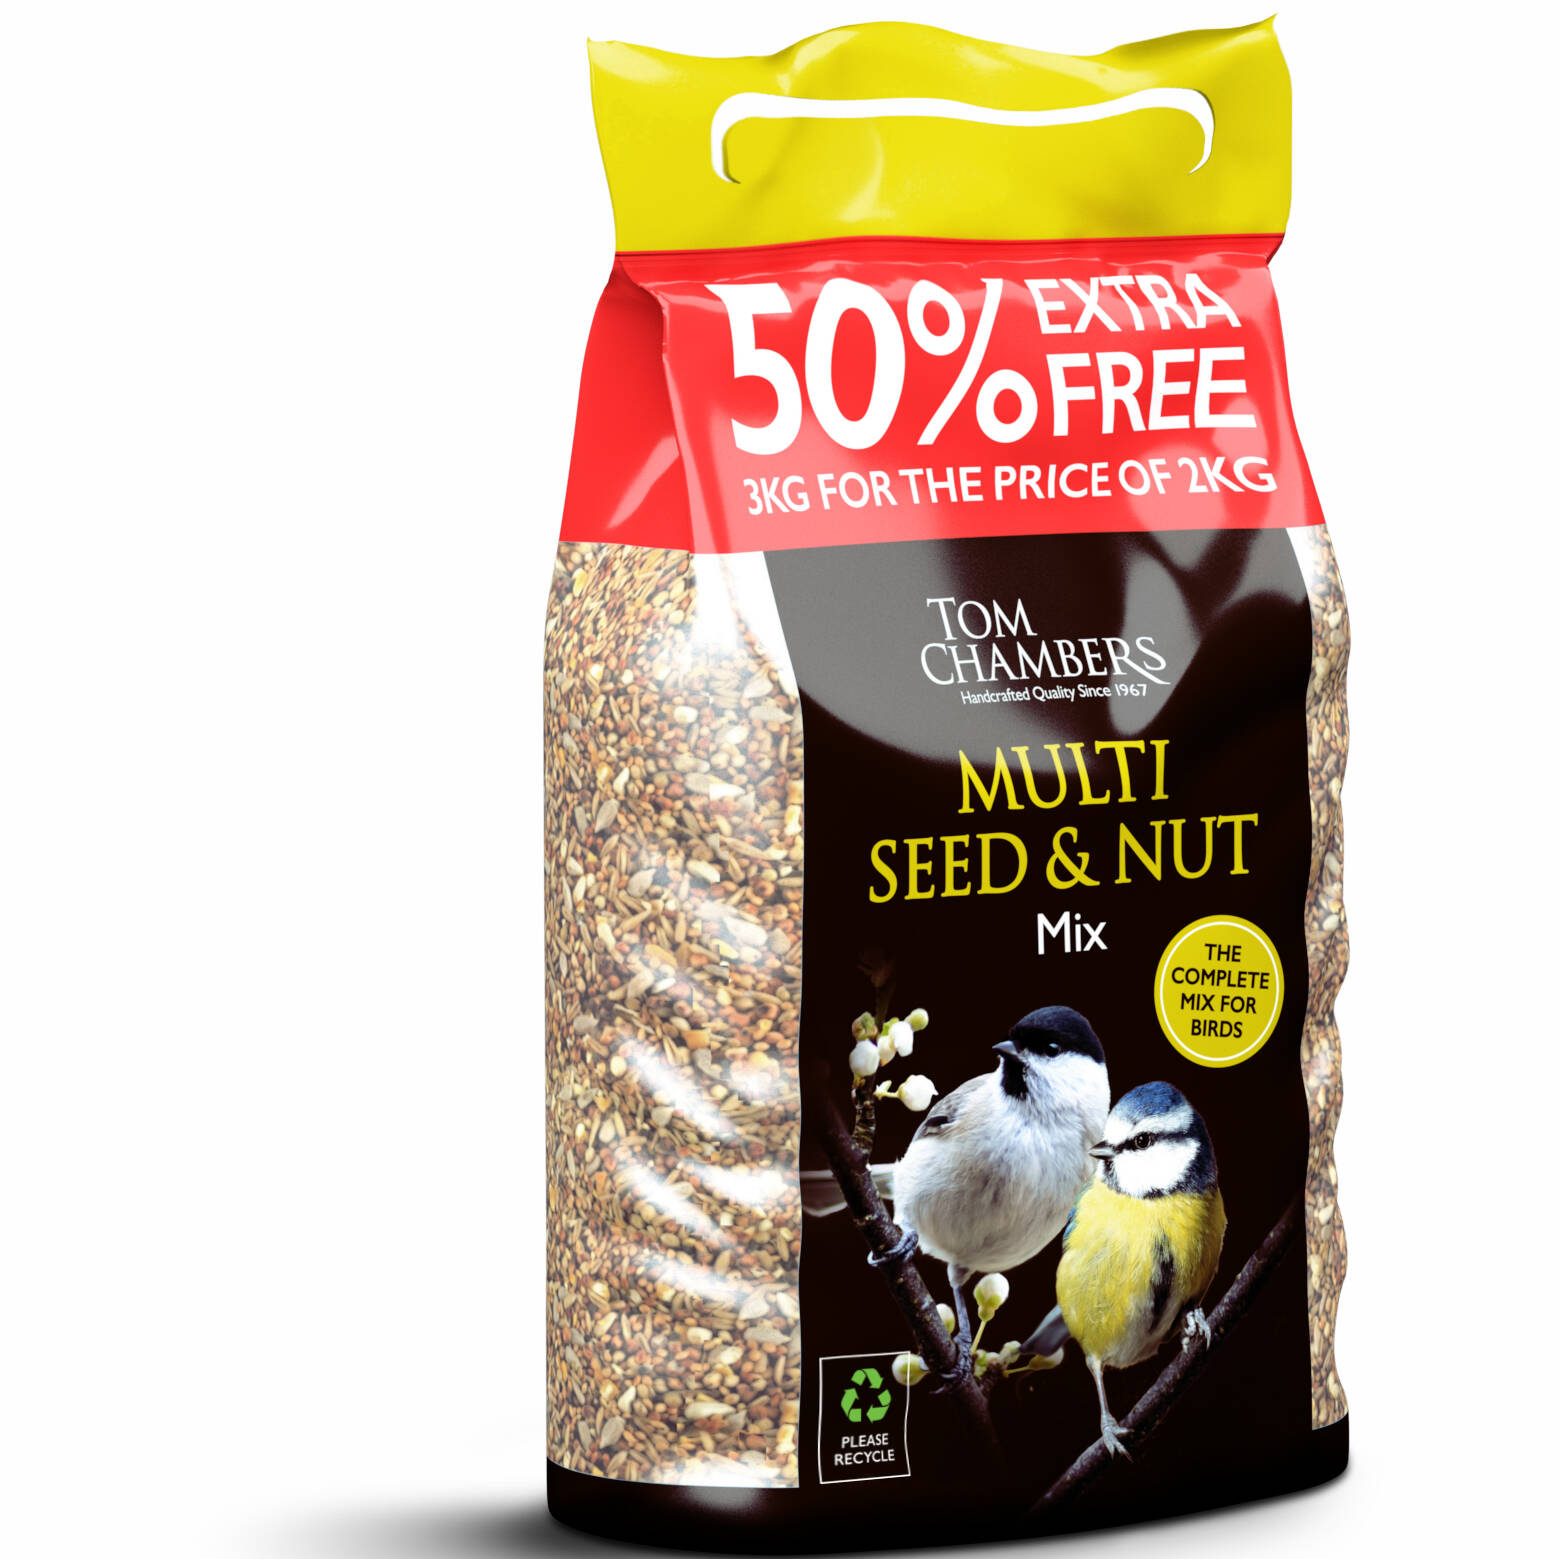 Tom chambers Multi Seed & Nut Mix - 50% FOC - 3kg